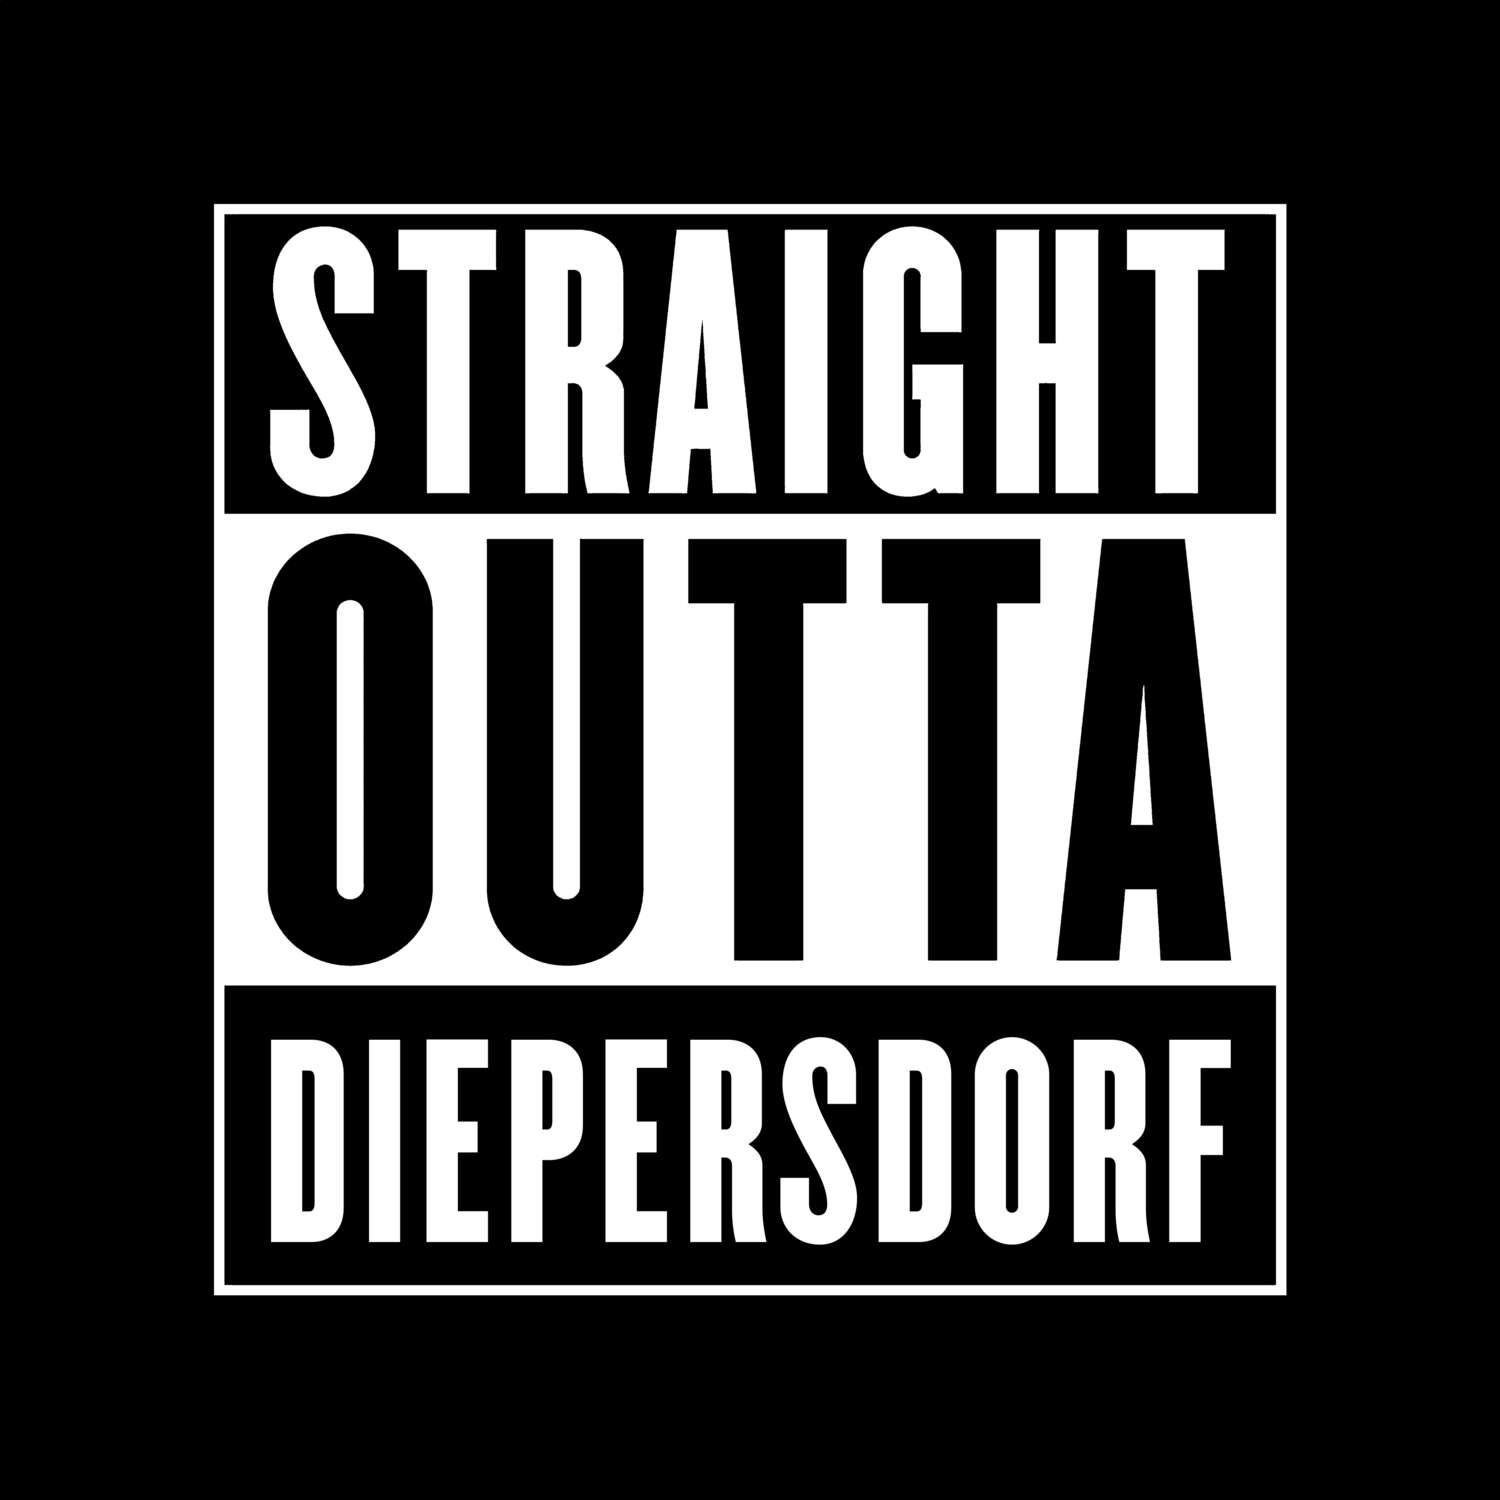 Diepersdorf T-Shirt »Straight Outta«